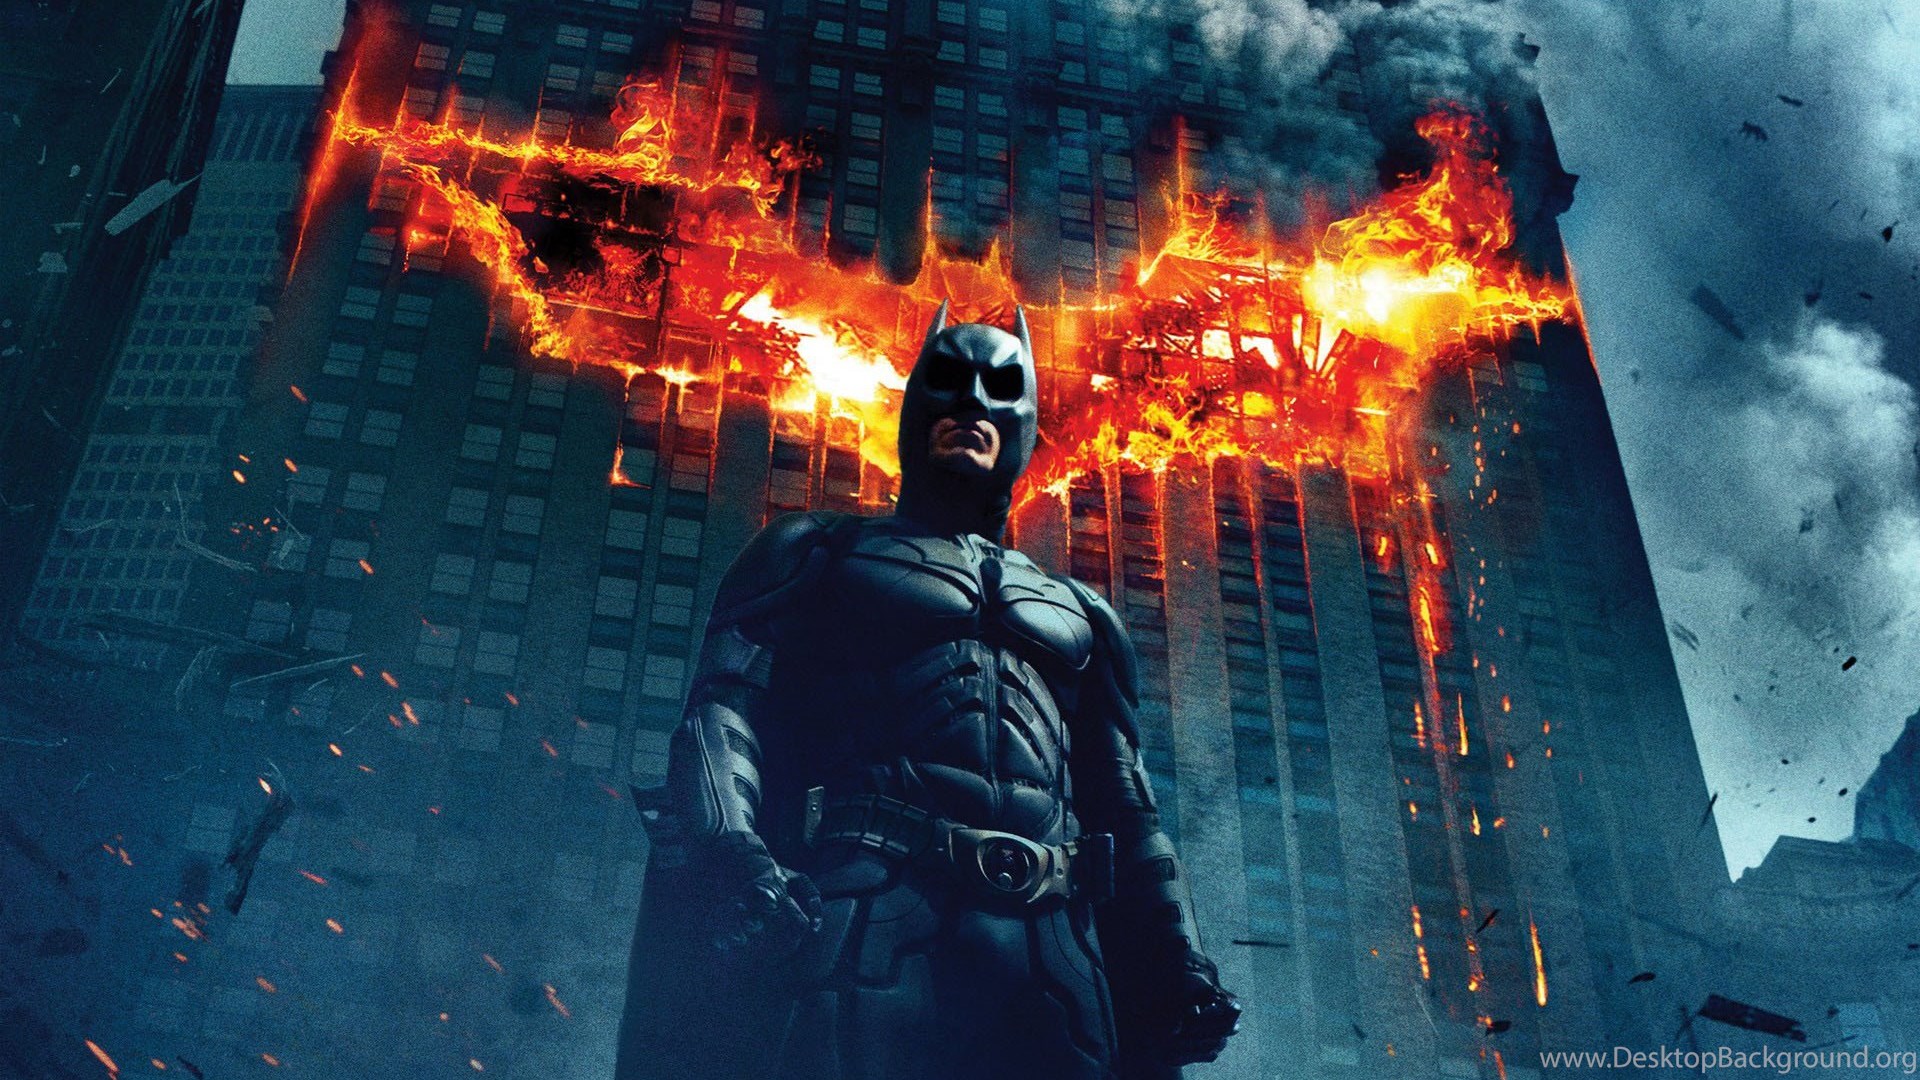 Movie Wallpaper Batman The Dark Knight Rises 3d Wallpaper Images Desktop Background